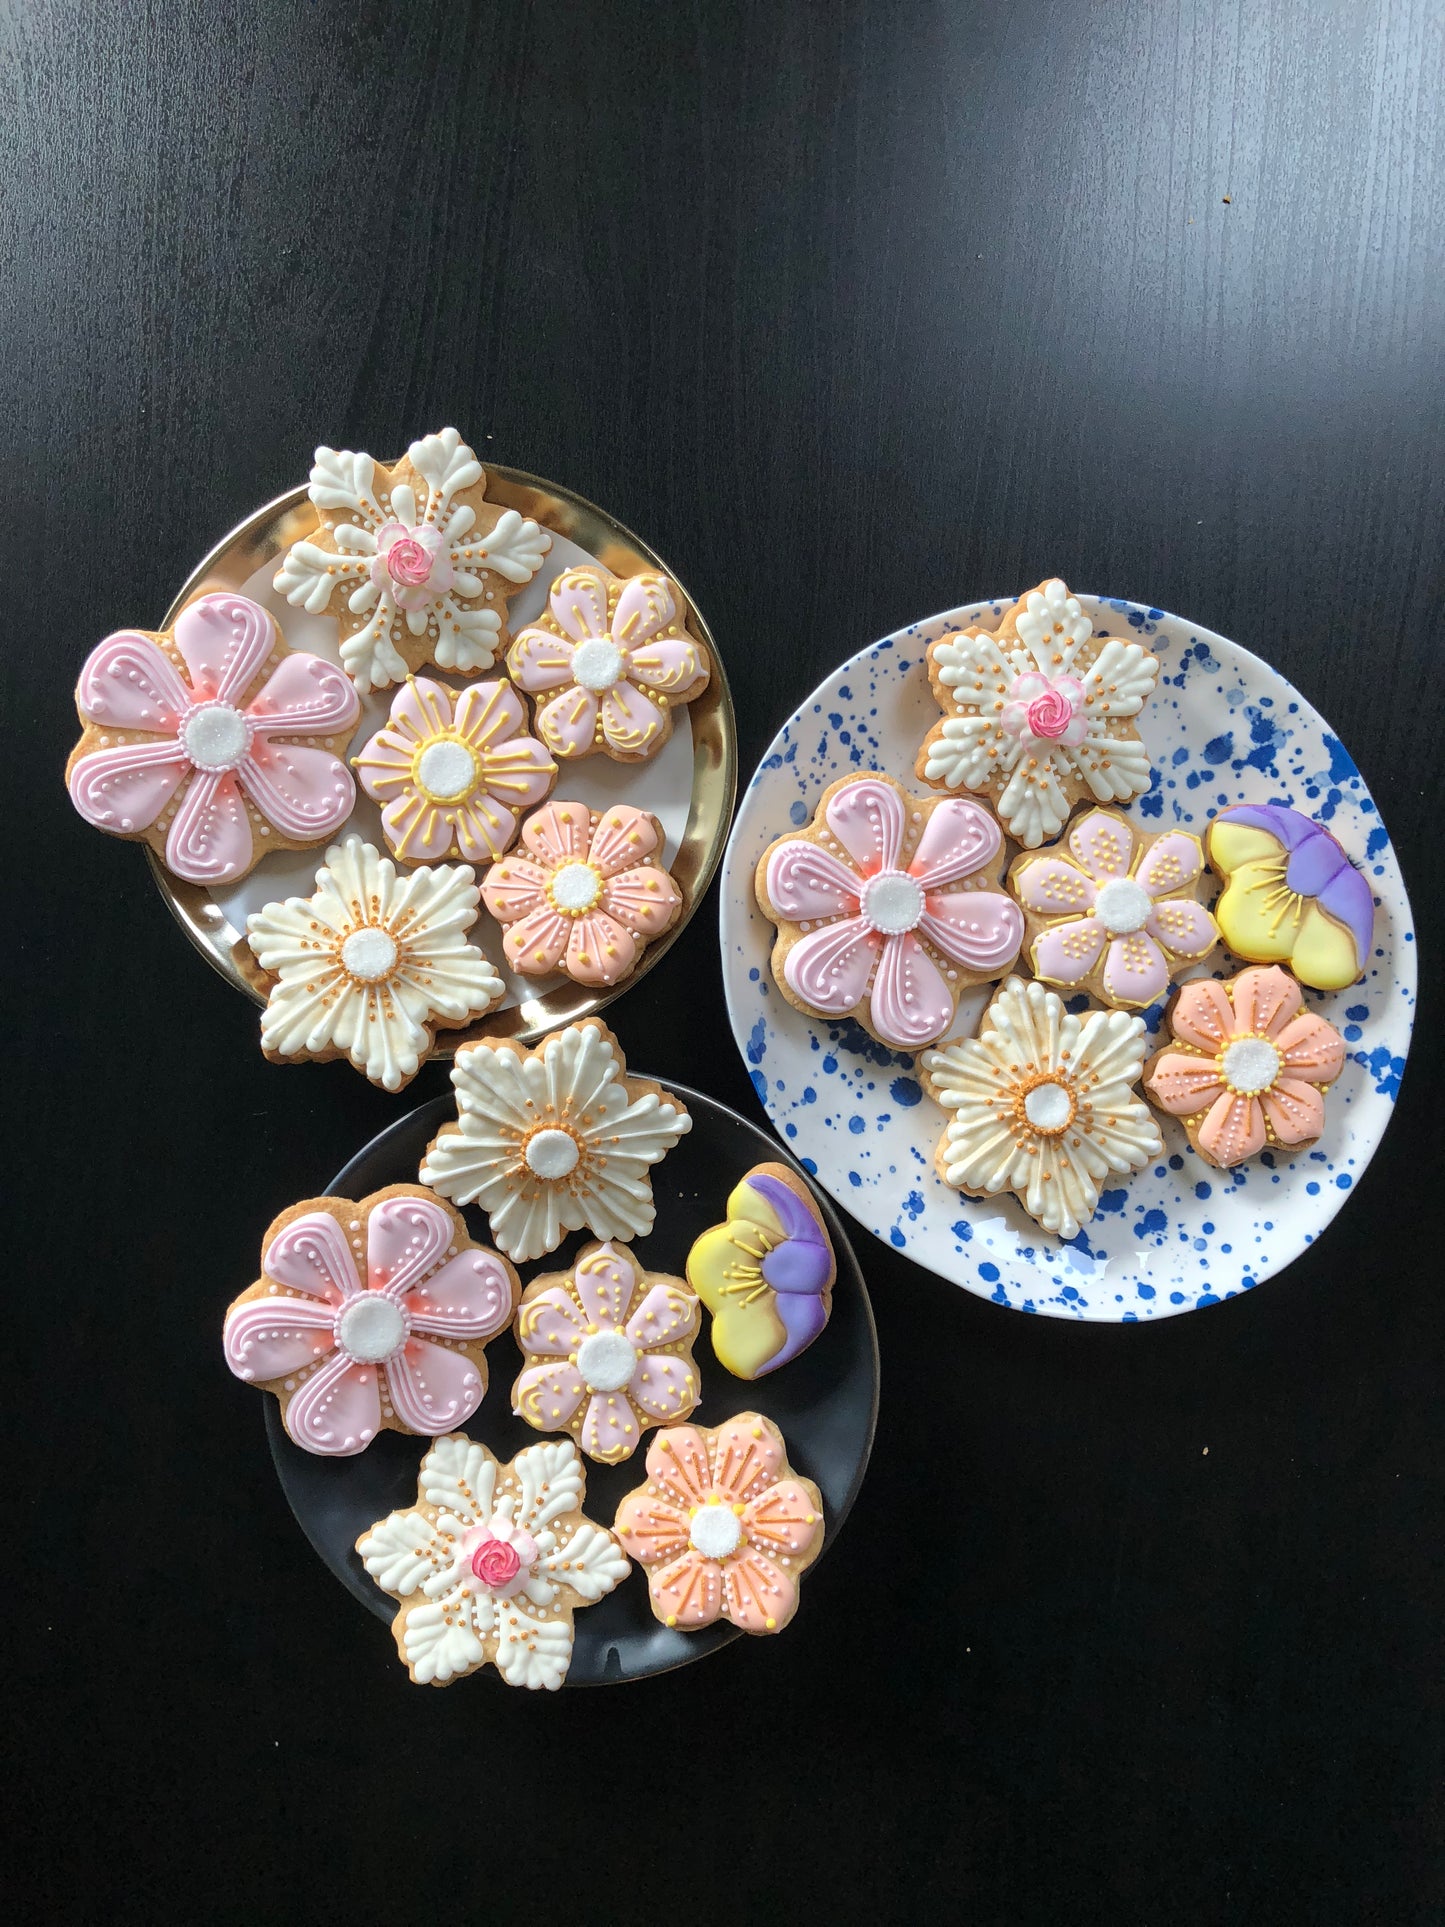 Custom made cookies